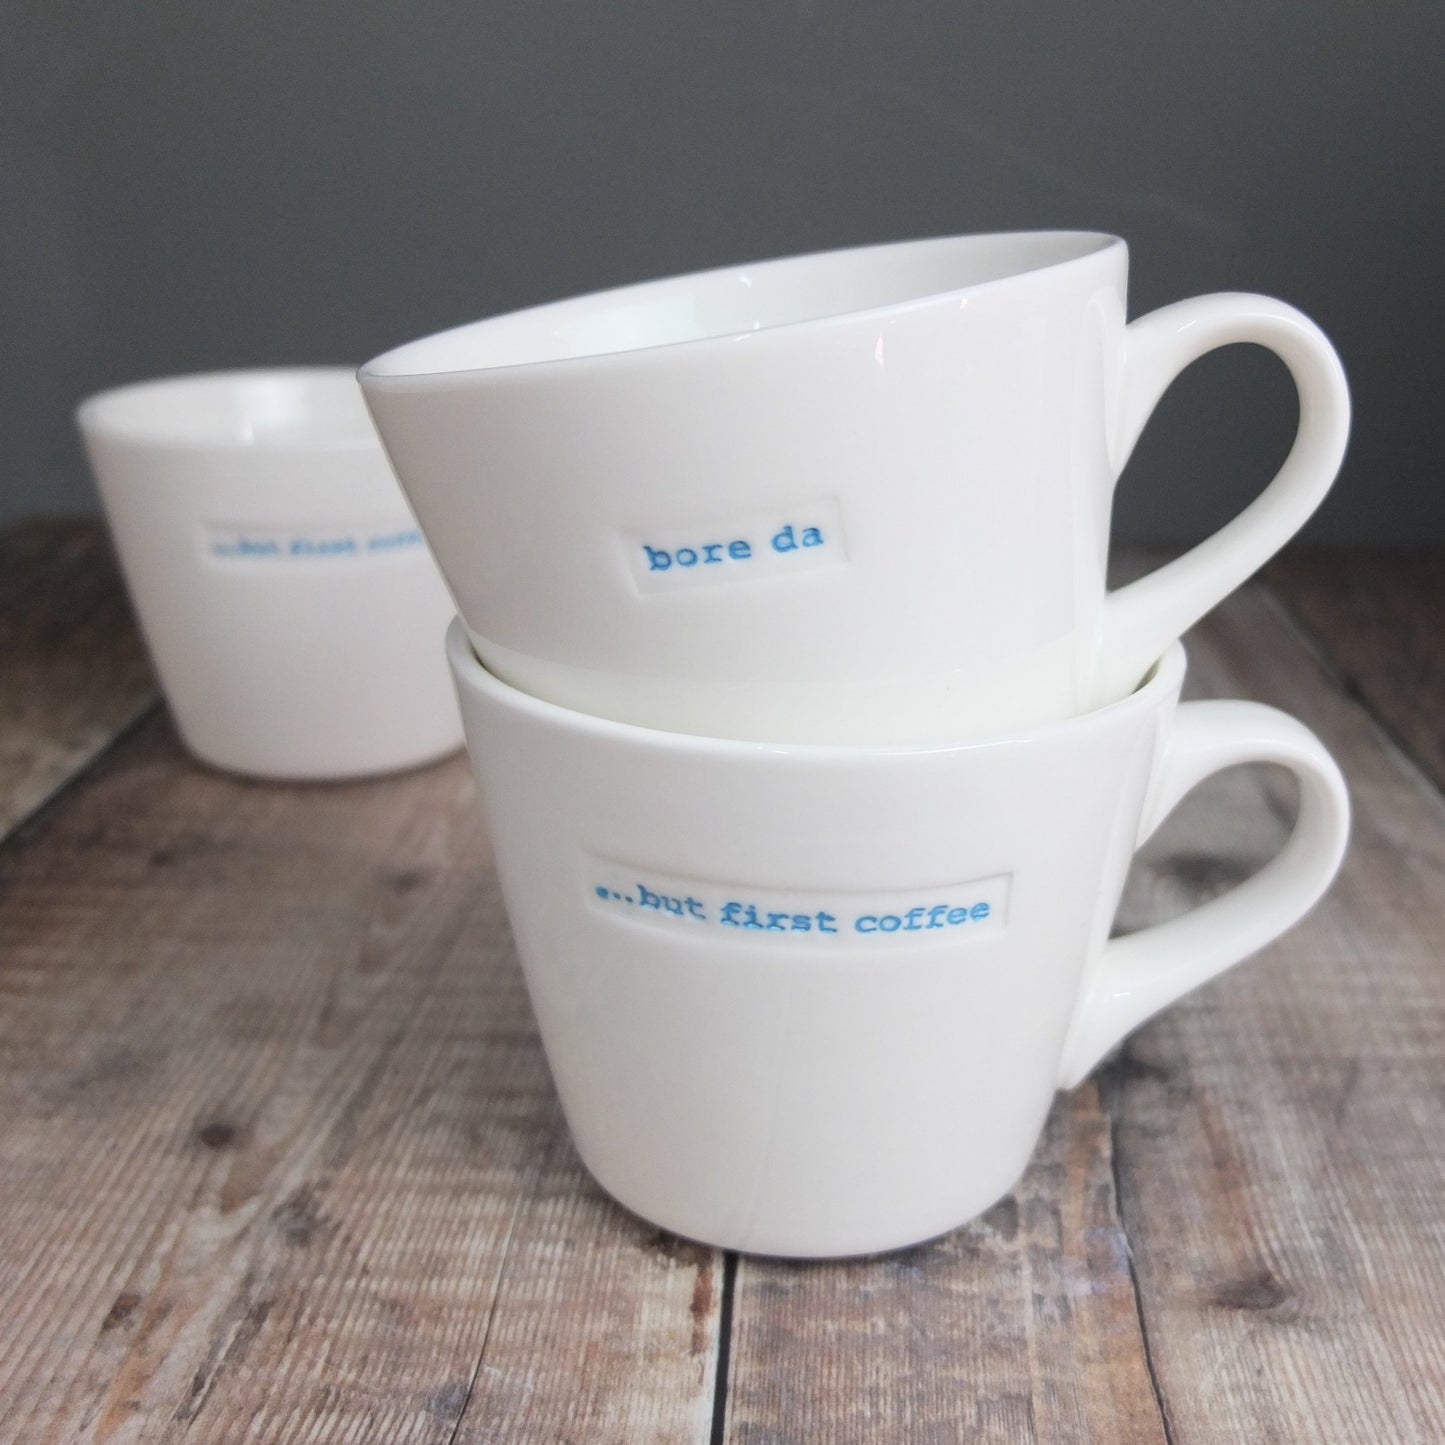 ...but first coffee Mug by Keith Brymer Jones